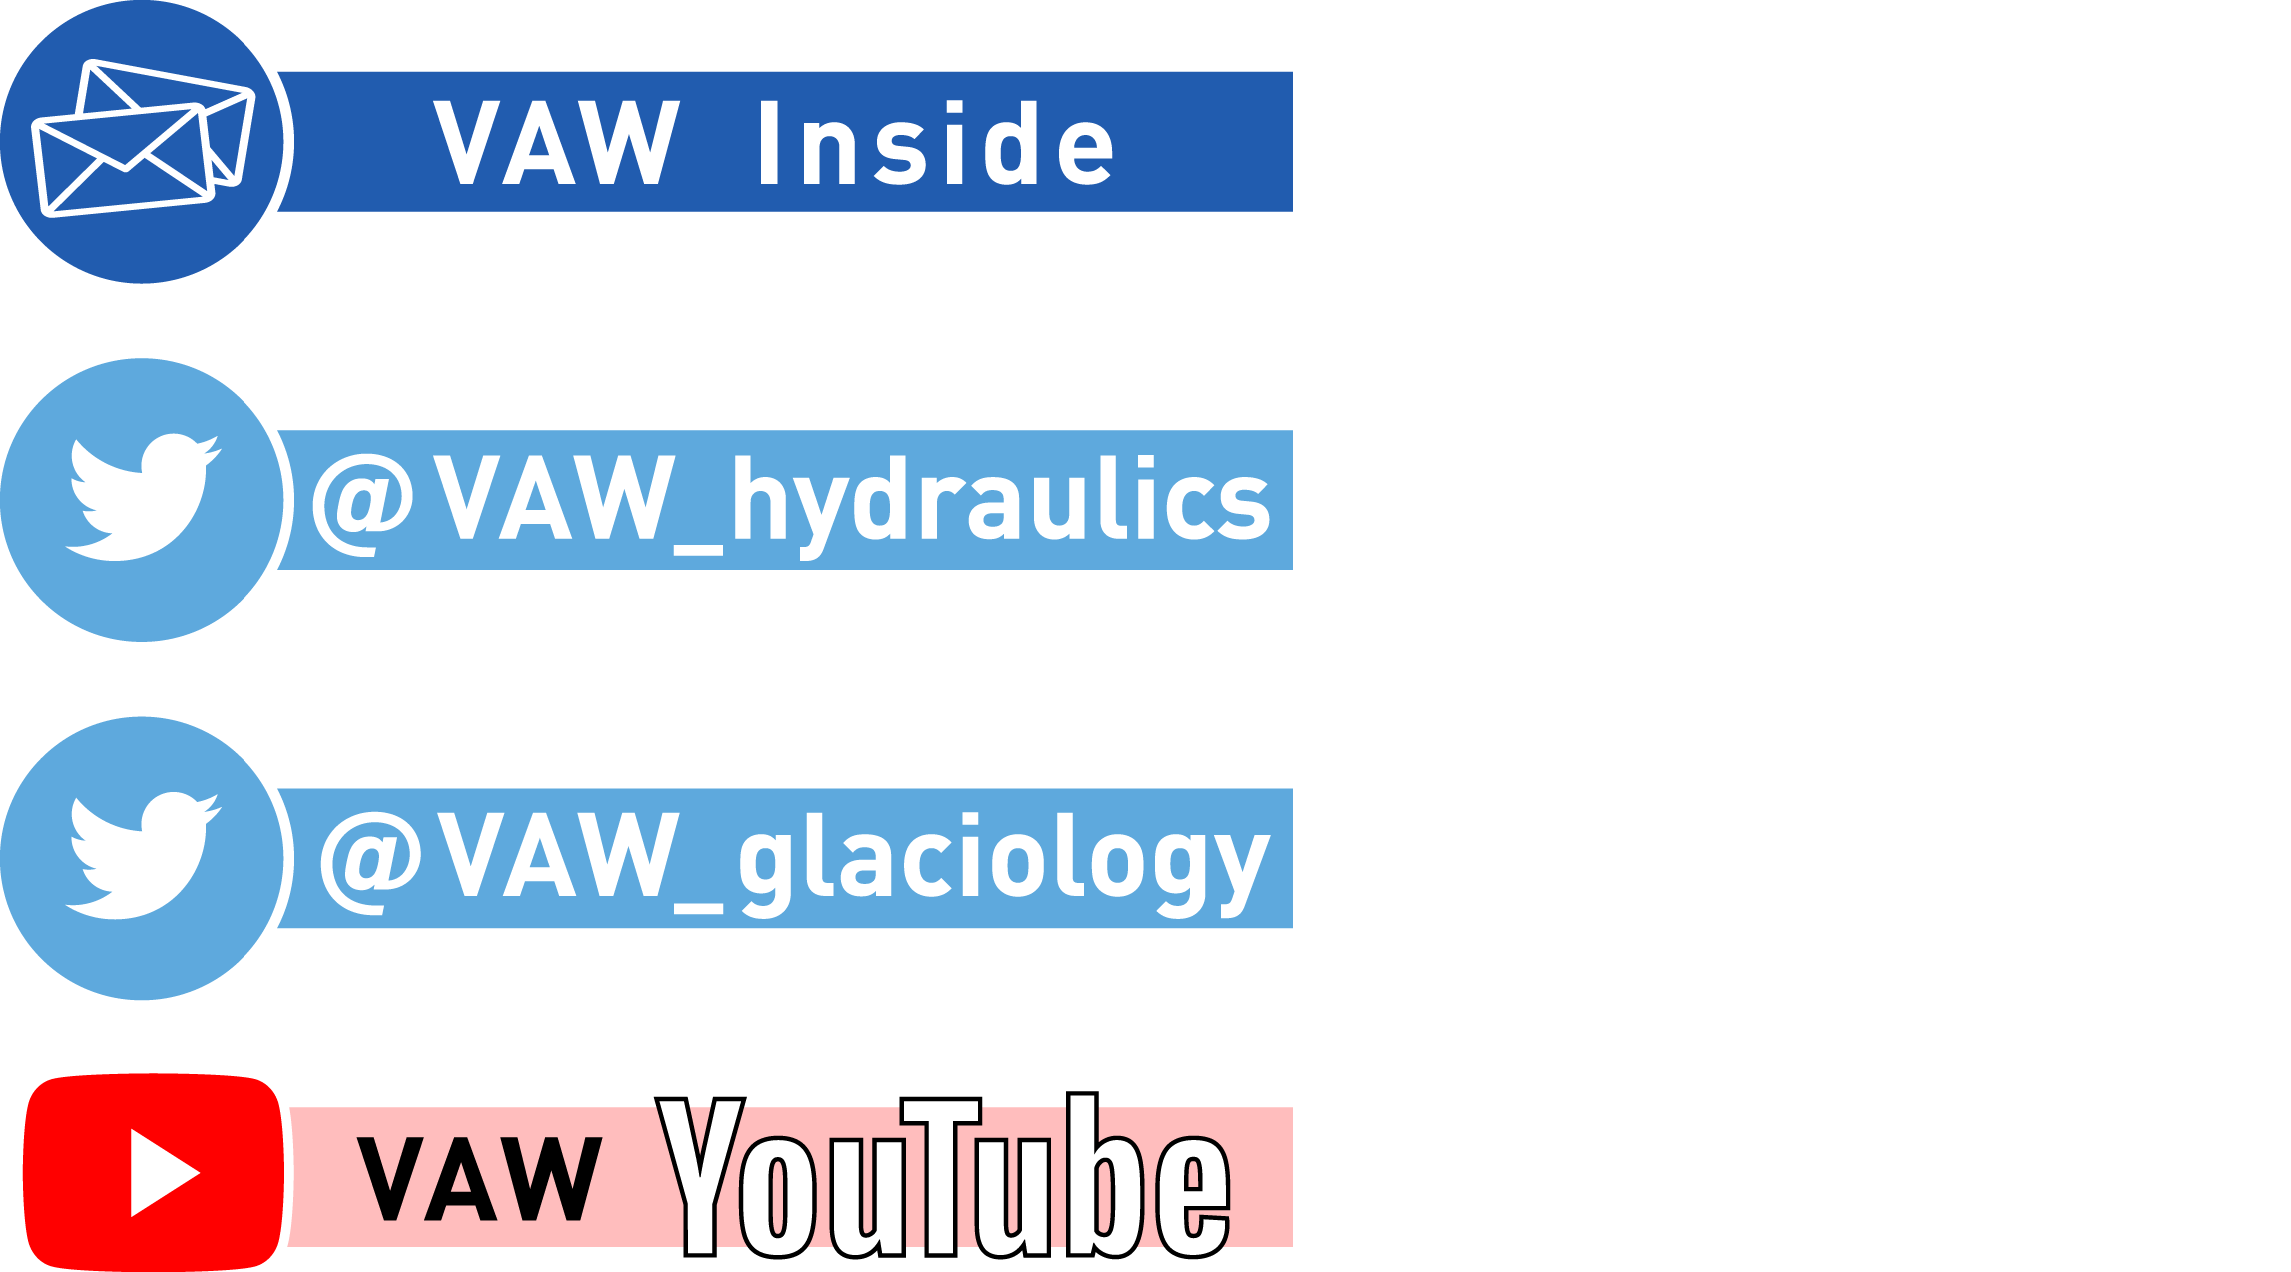 links: VAW Inside, @VAW_hydraulics, @VAW_glaciology, YouTube